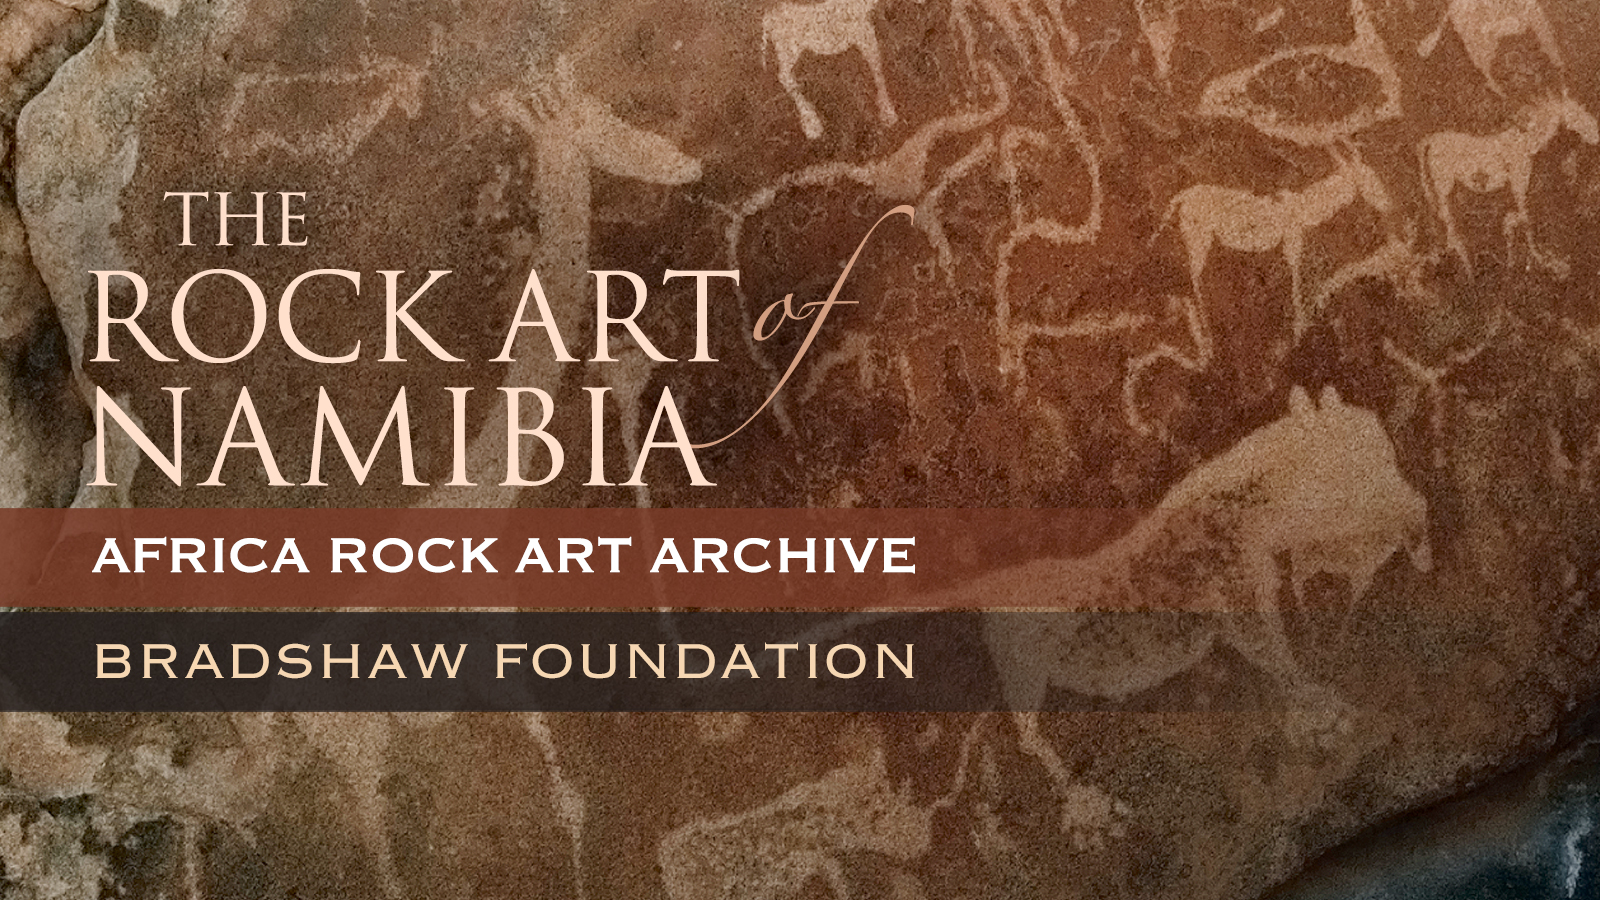 Bradshaw Foundation, Rock Art, Namibia, White Lady, Brandberg, Twyfelfontein, /Ui- //aes, Damara, Animal, Engravings, Petroglyphs, Rock Art Network